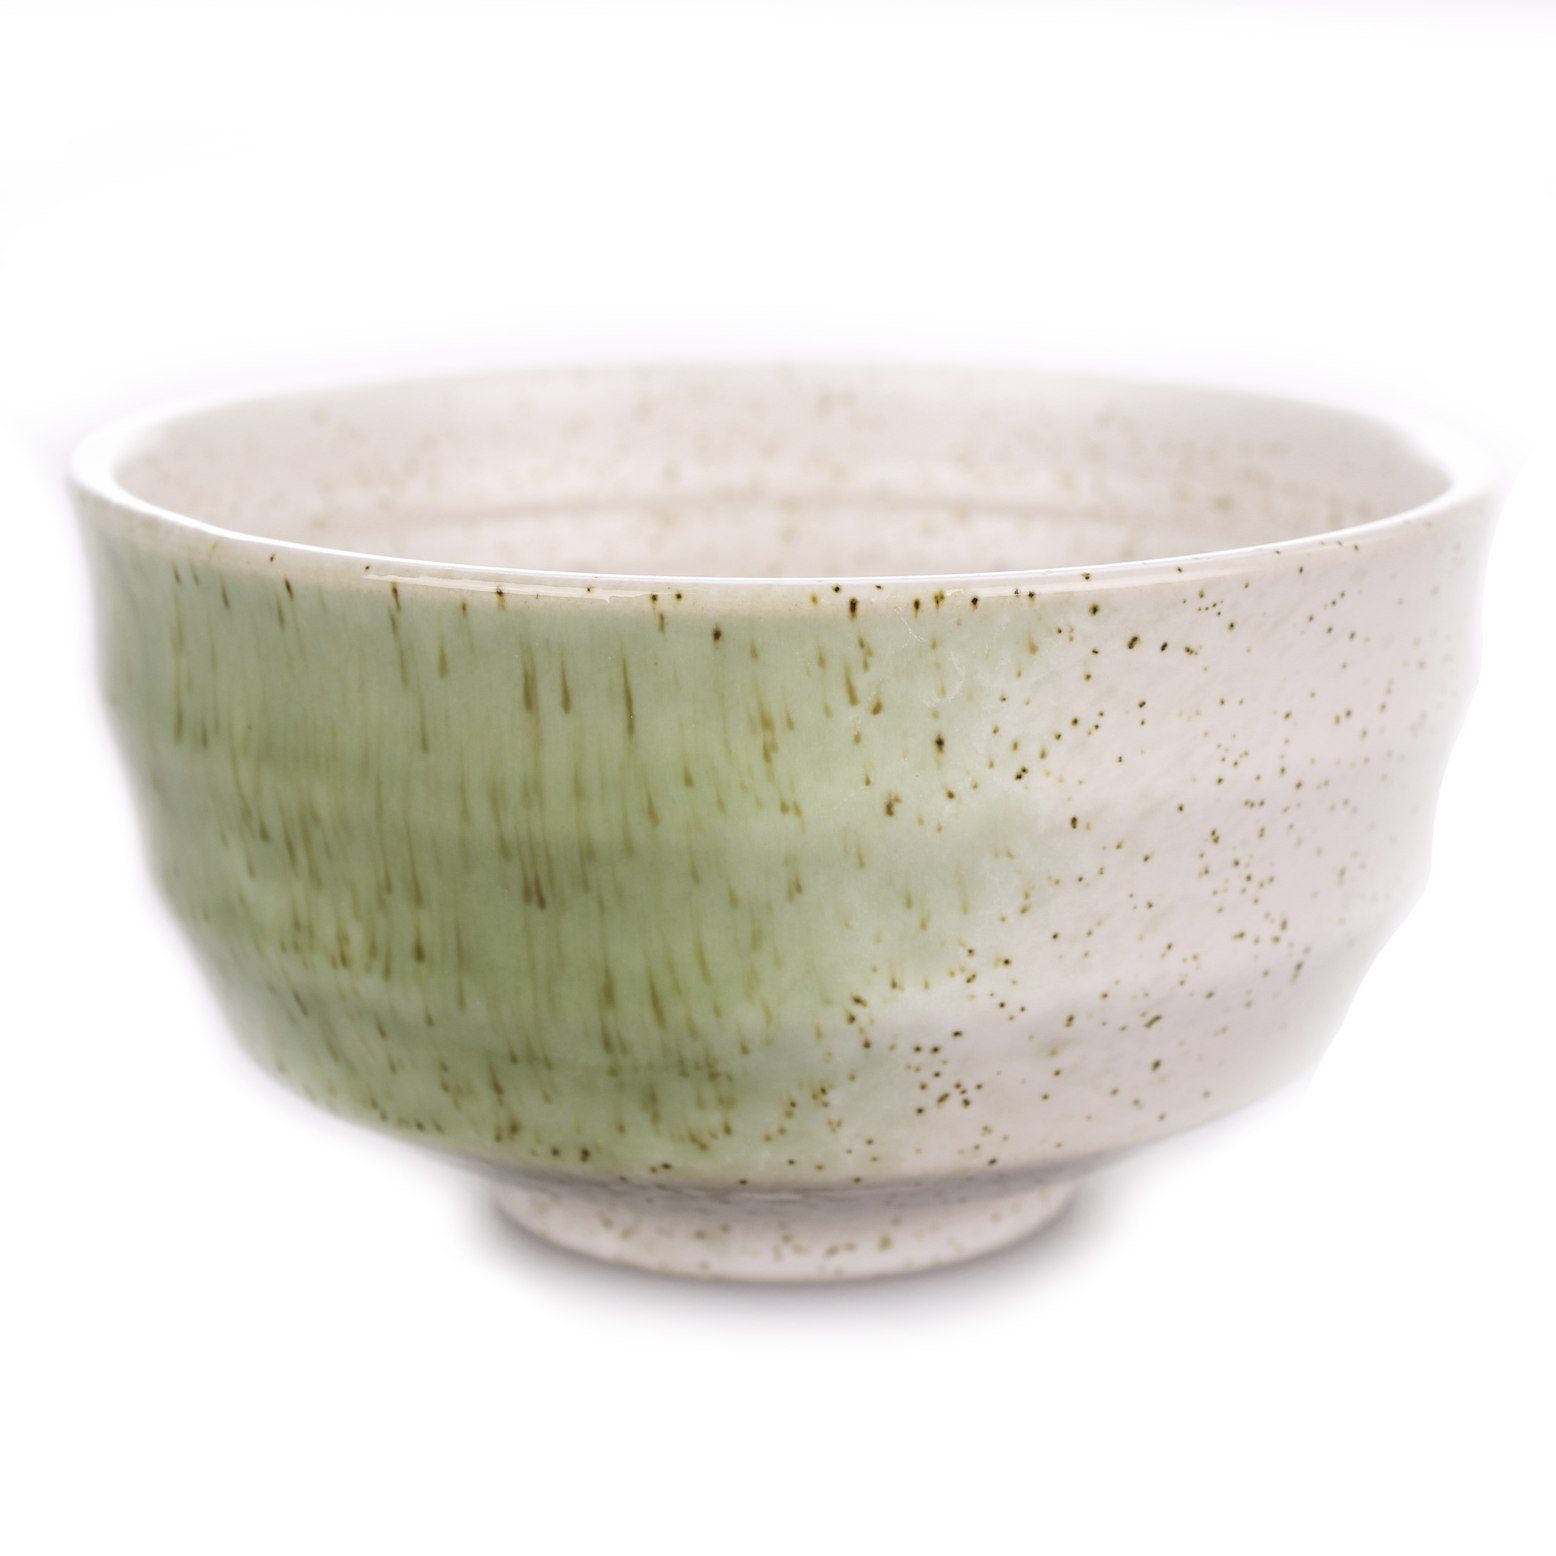 u. 2 Matcha Goodwei "Shiro": Keramik (5-tlg), Teezeremonie Duo-Set Besenhalter Teeservice Schalen, Besen